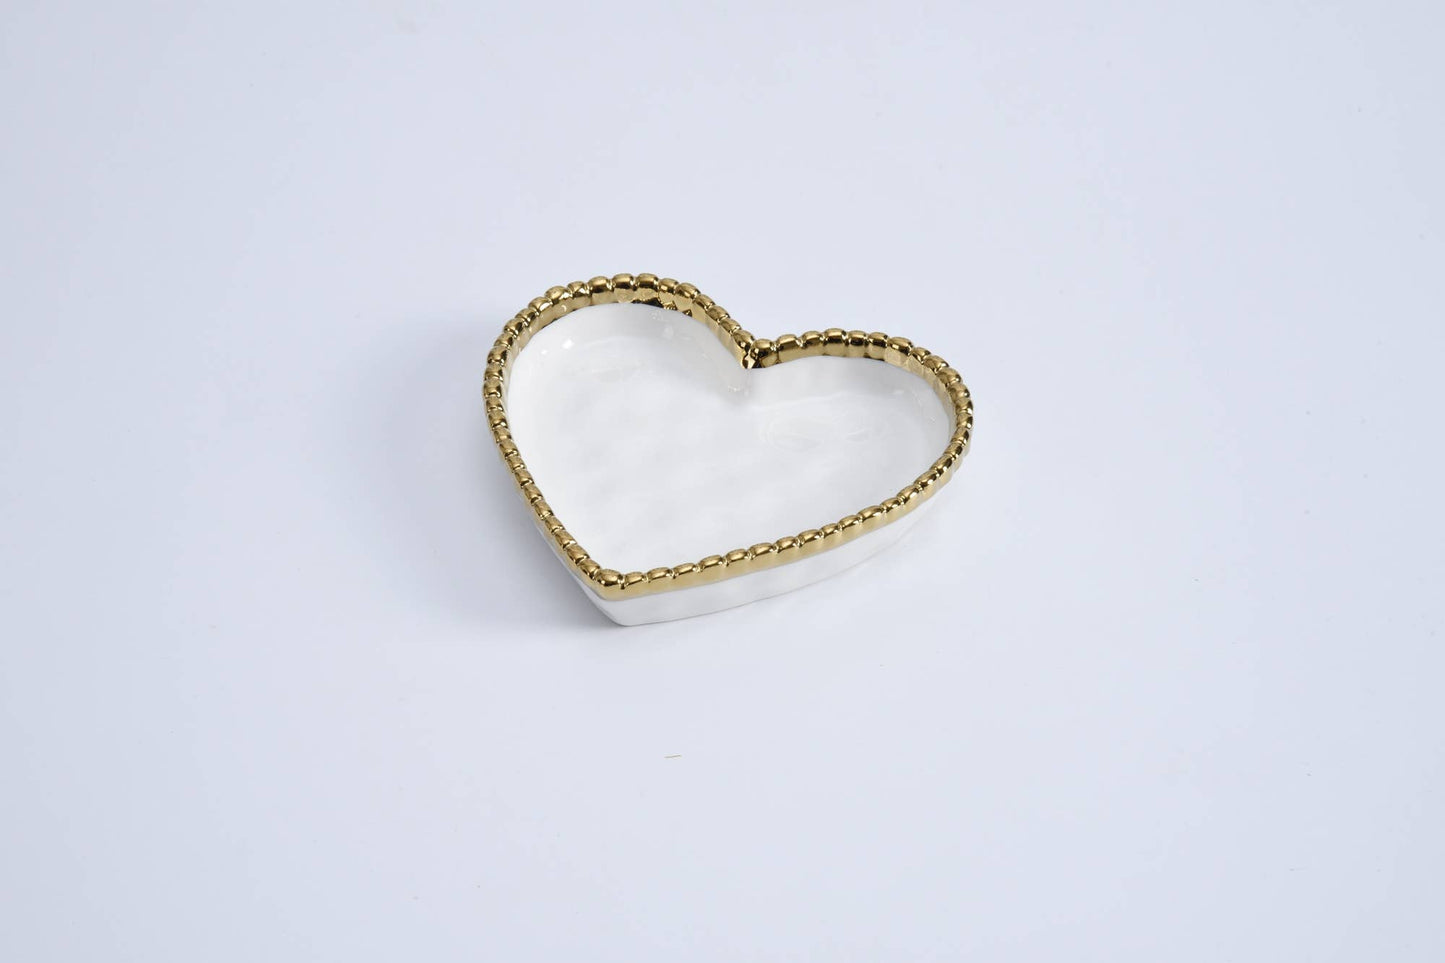 Mini Heart Dish White with Gold Trim